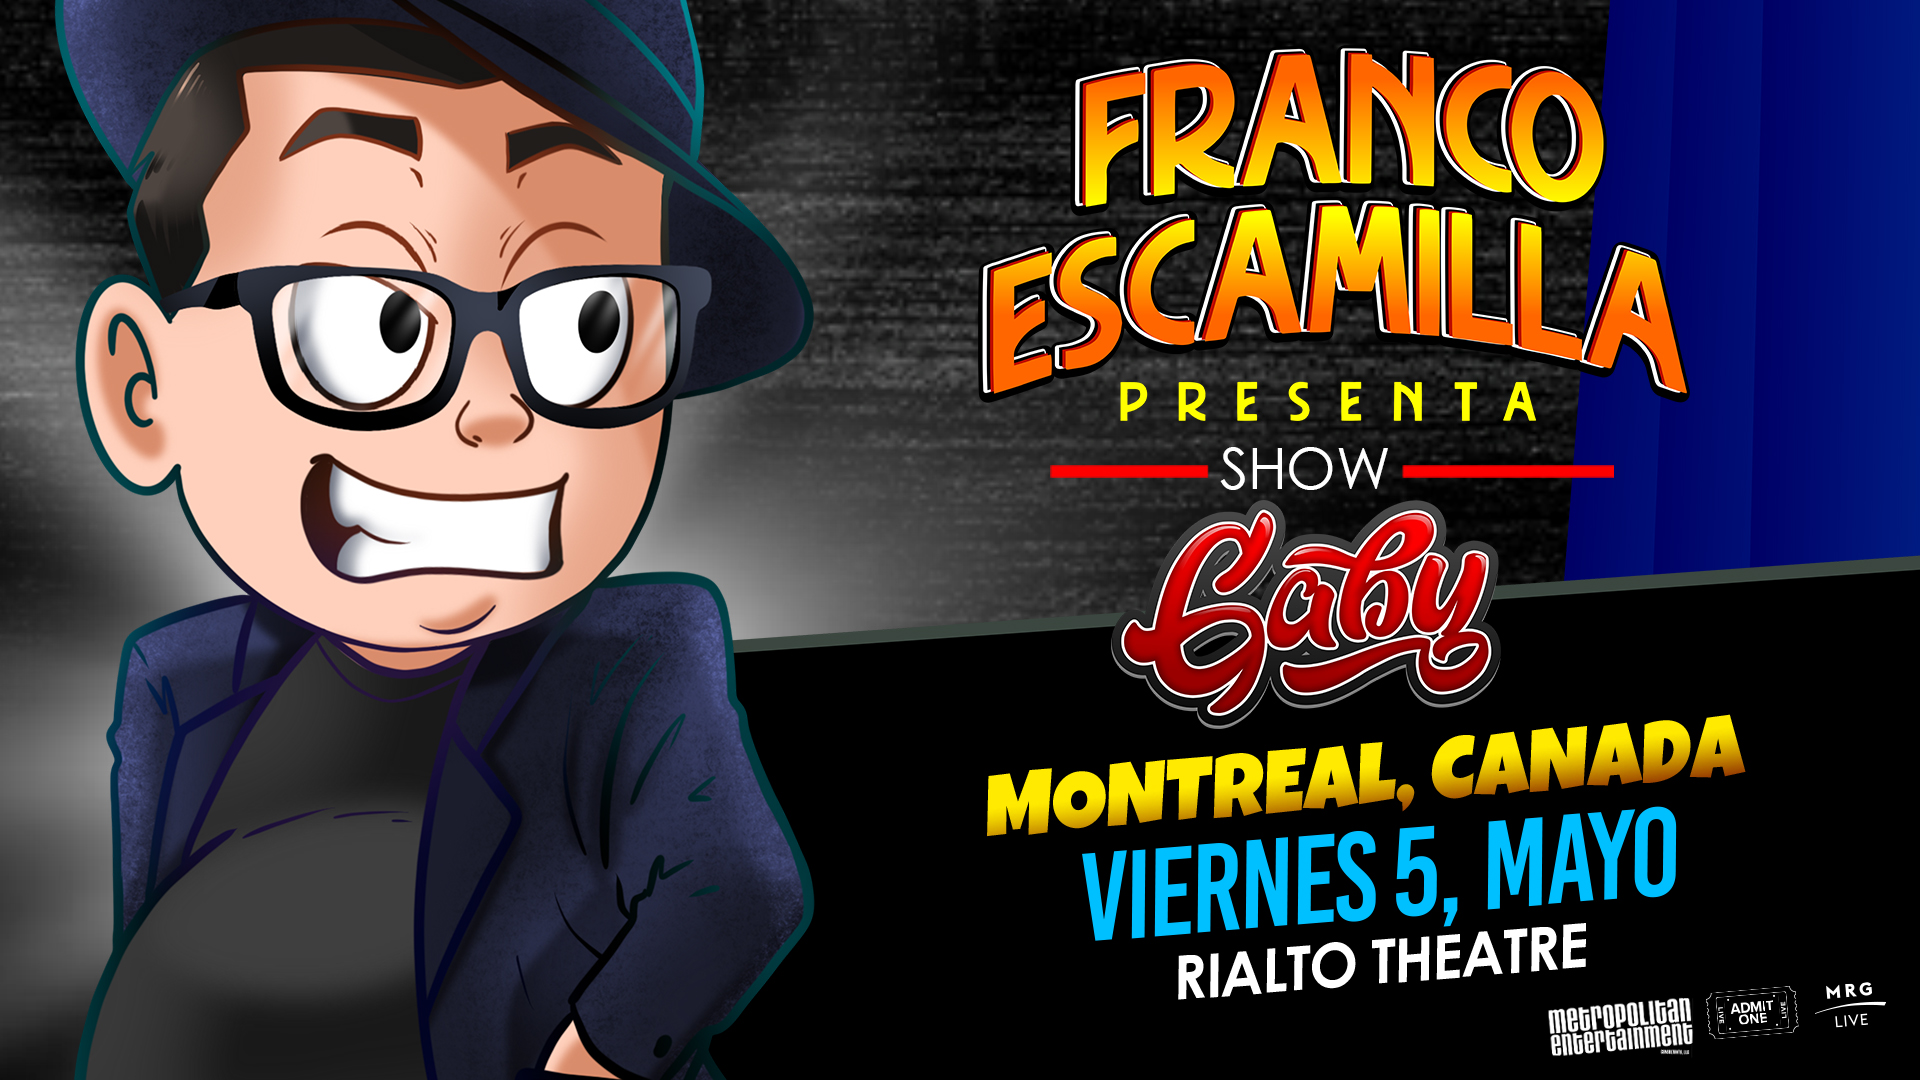 MRG Live & Metropolitan Entertainment present Franco Escamilla